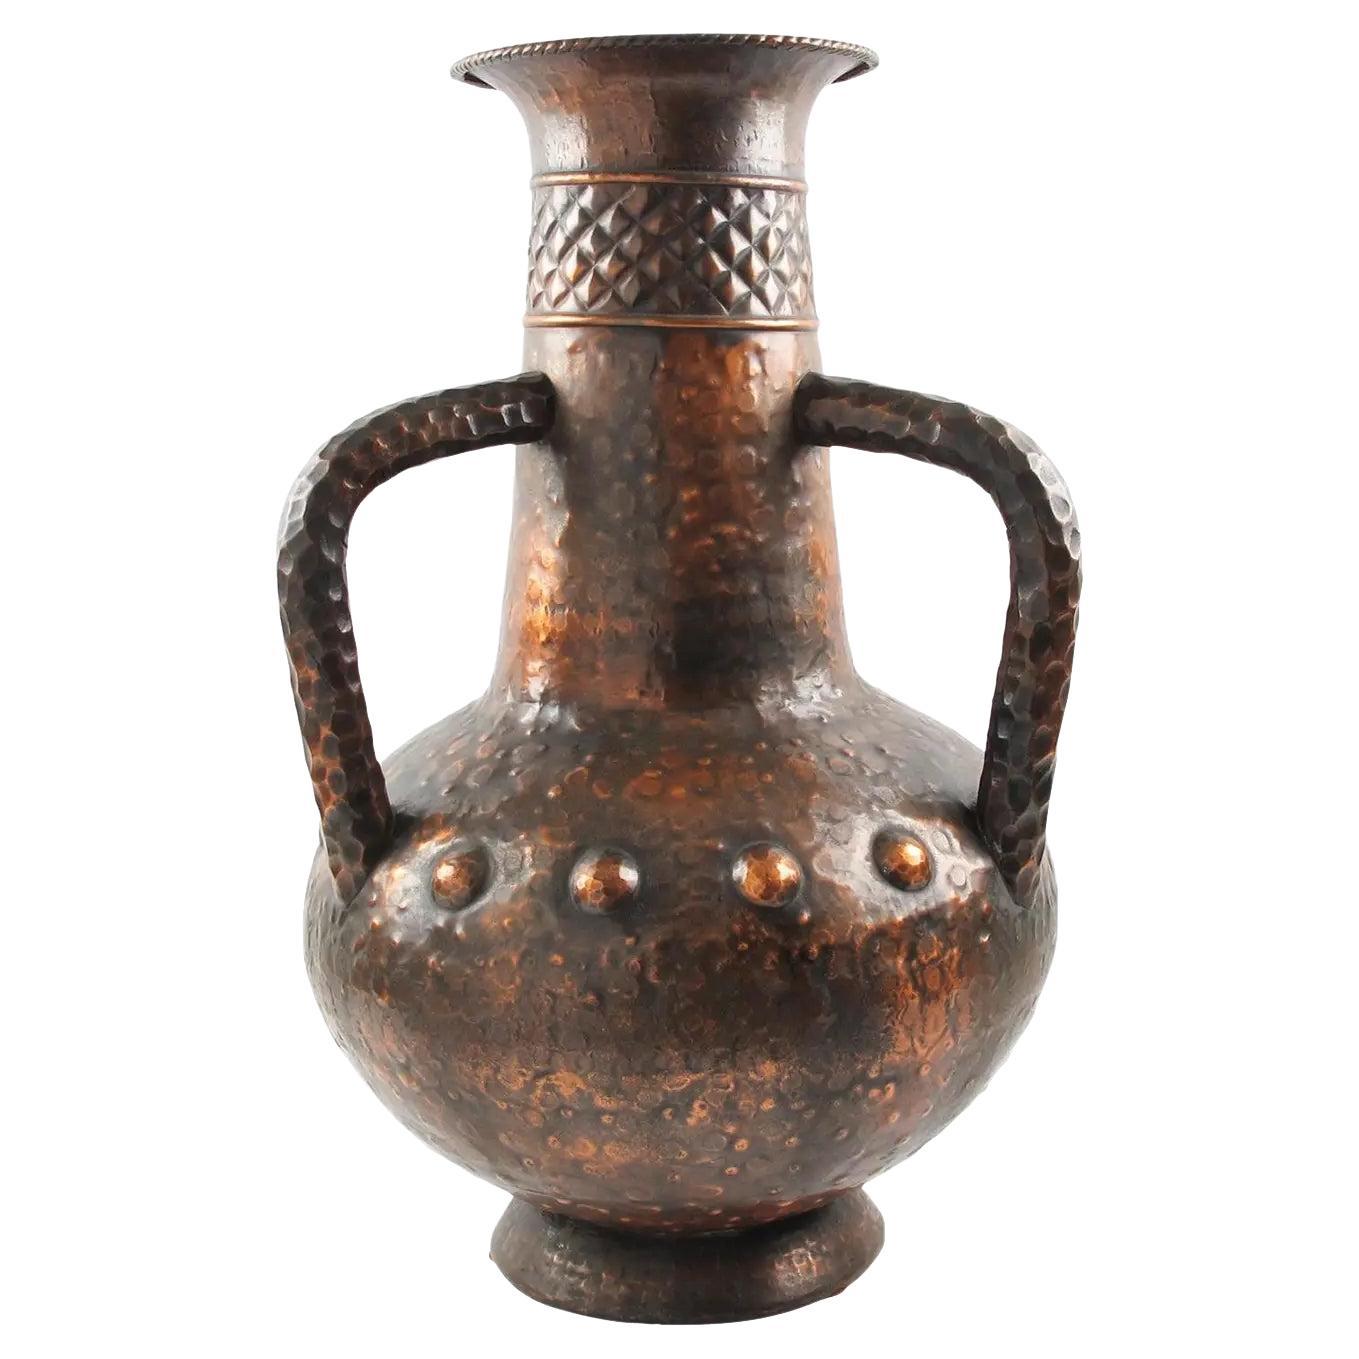 Important Italian Copper Baluster Urn Vase, 1960s